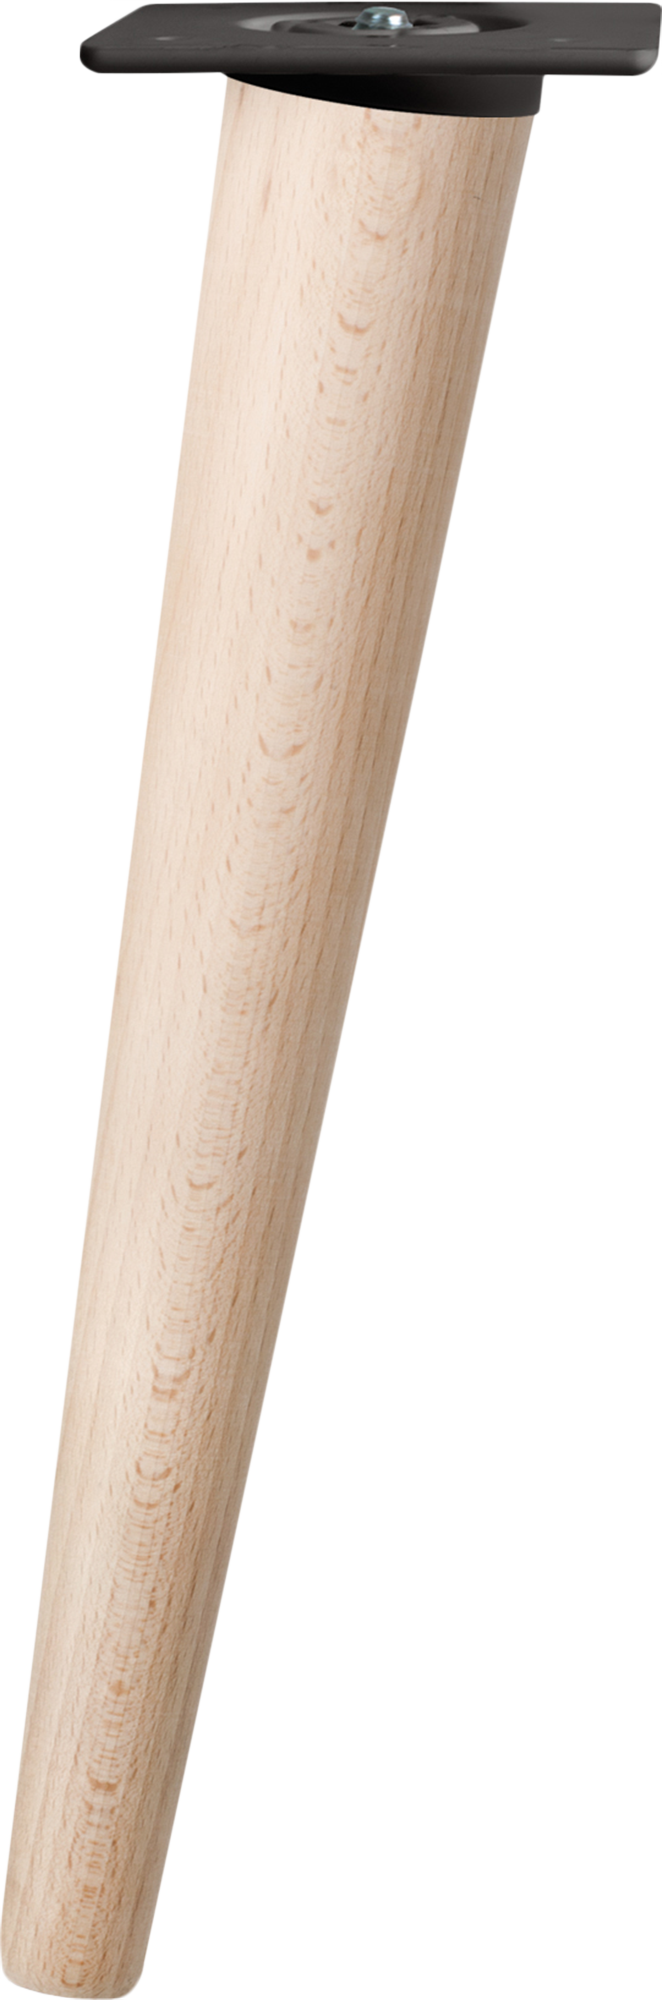 Pata fija inclinada de madera para mueble 30 cm